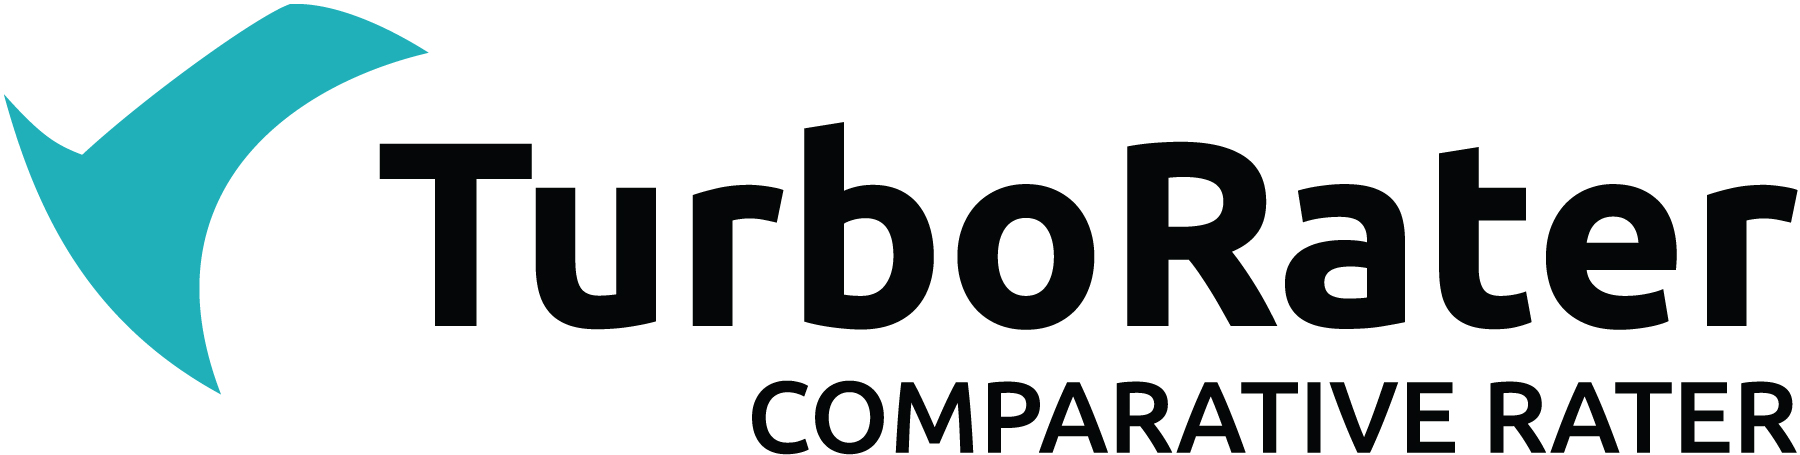 TurboRater logo